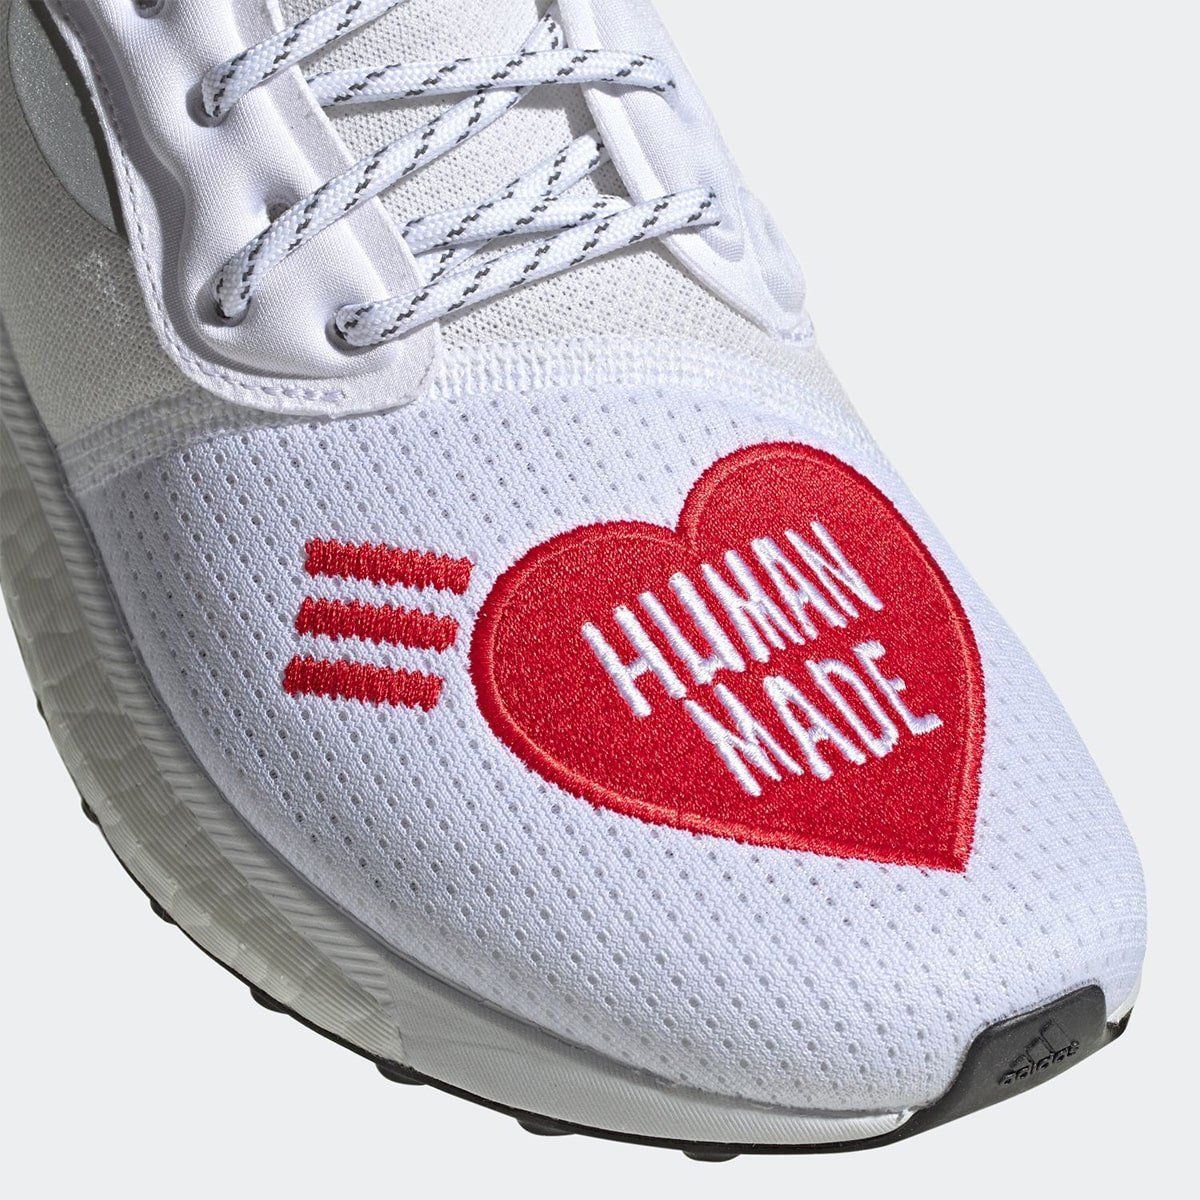 adidas Officially Unveil the HUMAN MADE x Pharrell Williams Hu 